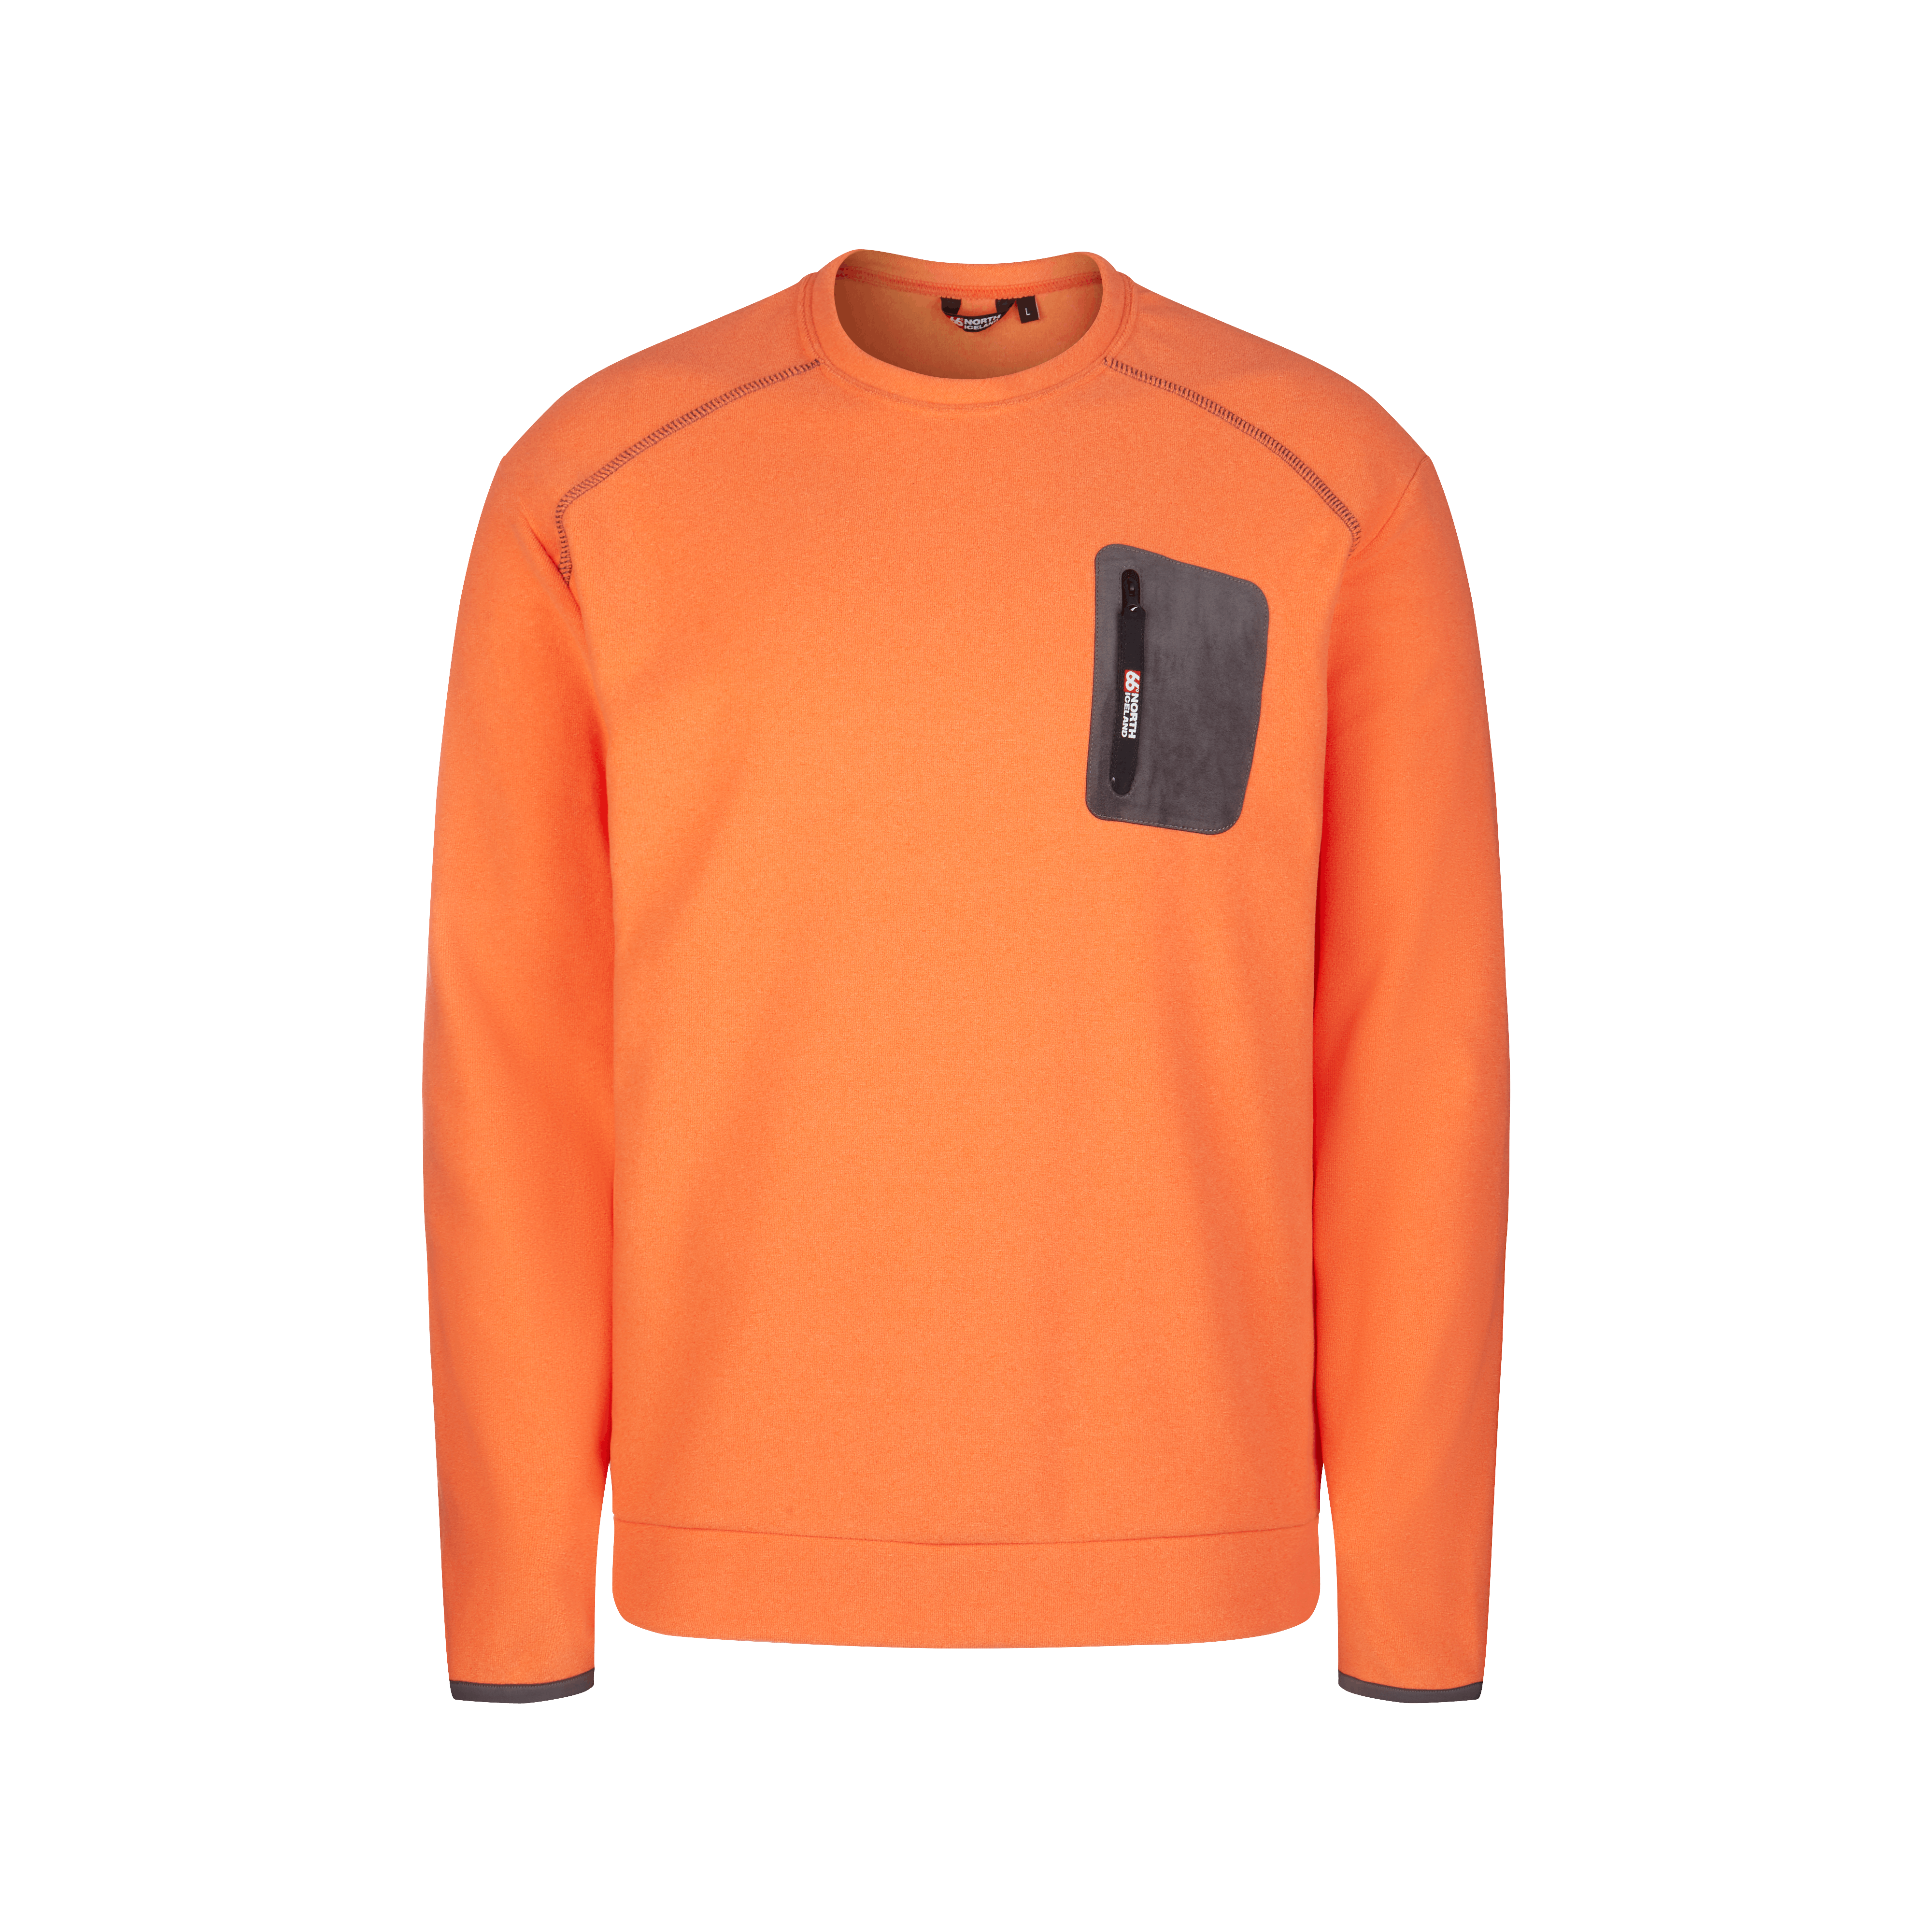 66 North Men's Dyngja Tops & Vests - Flat Orange - M